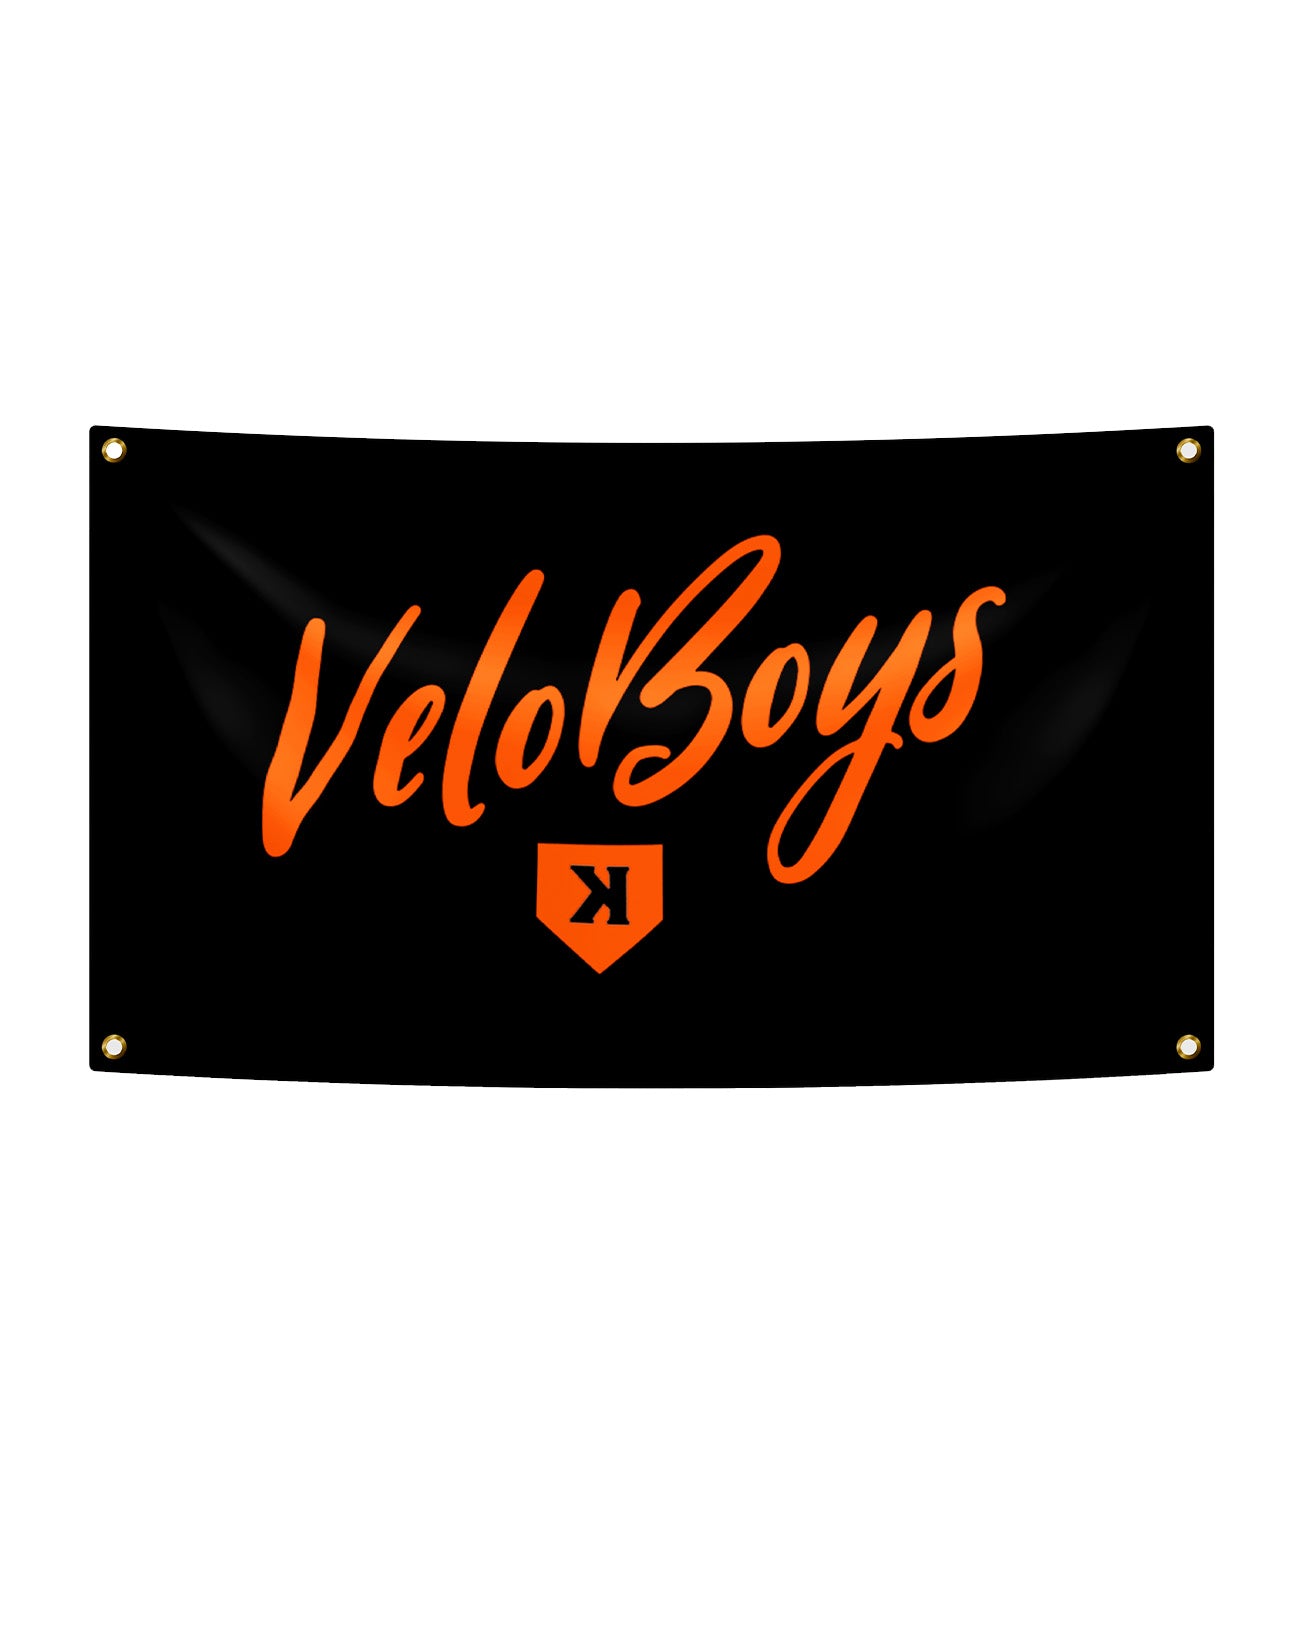 VeloBoys Flag